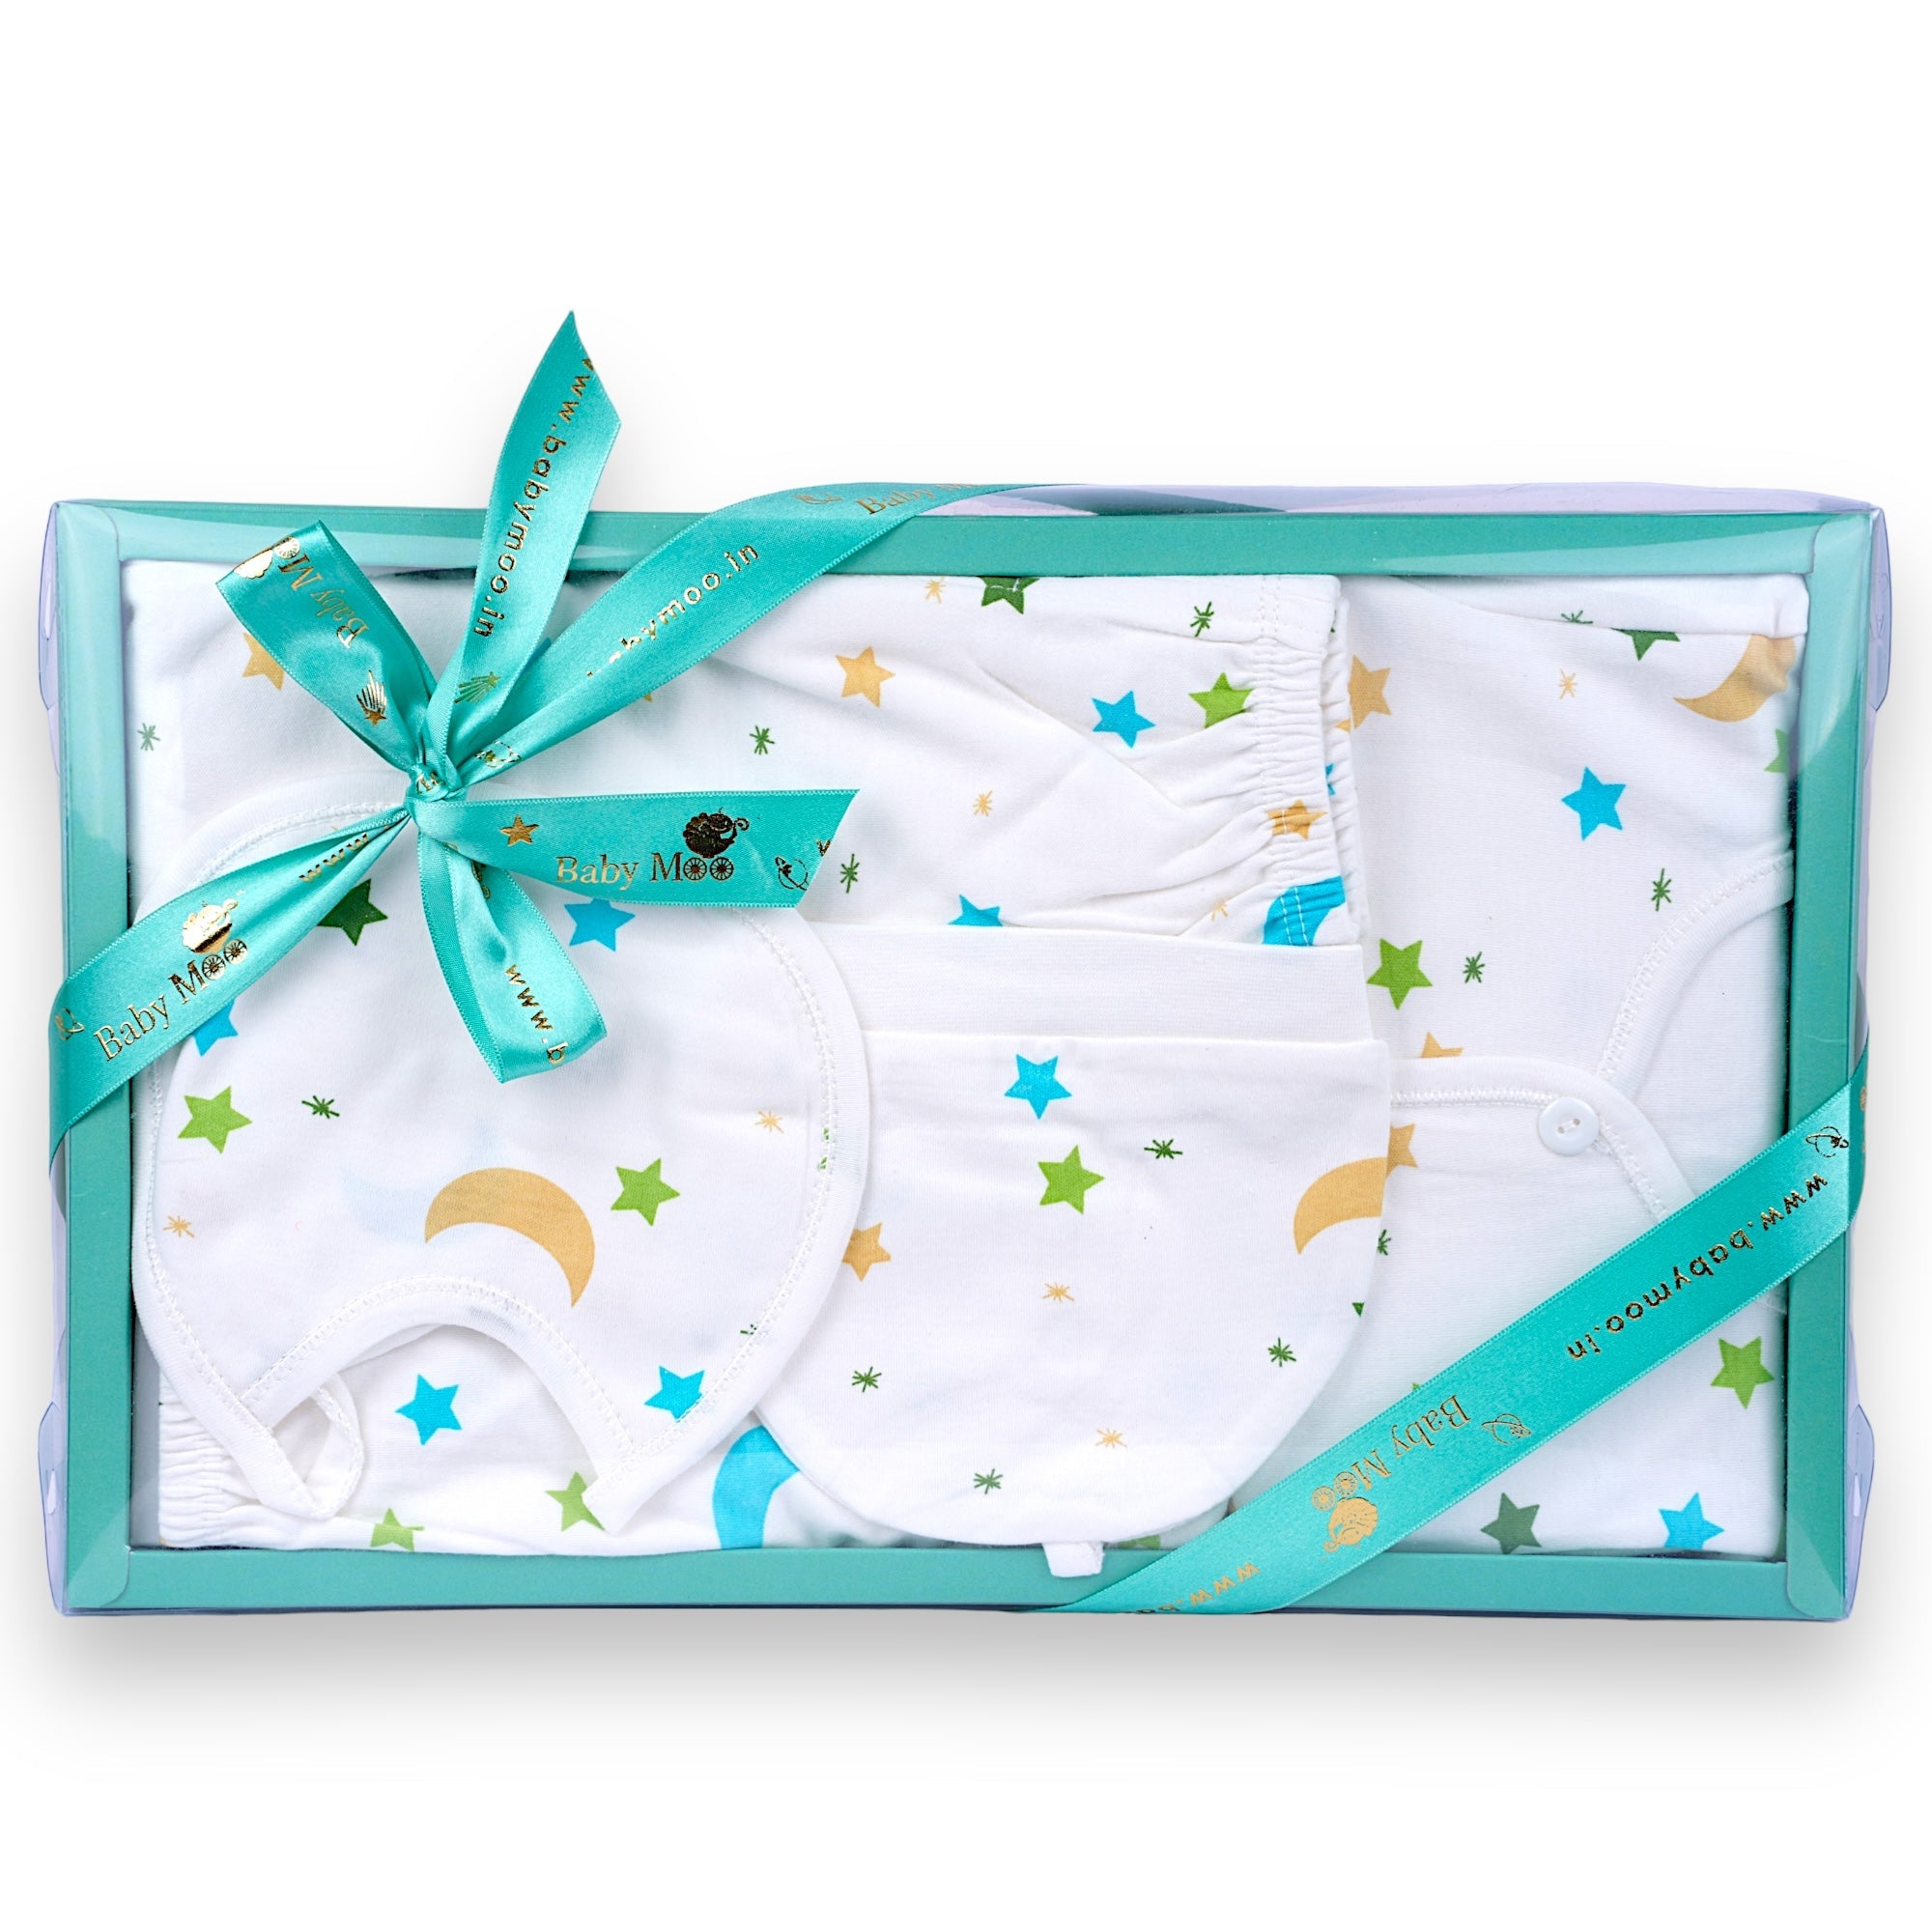 Baby Moo Star and Moon Print Cap Bib Pyjamas 5 Pcs Clothing Gift Set - White